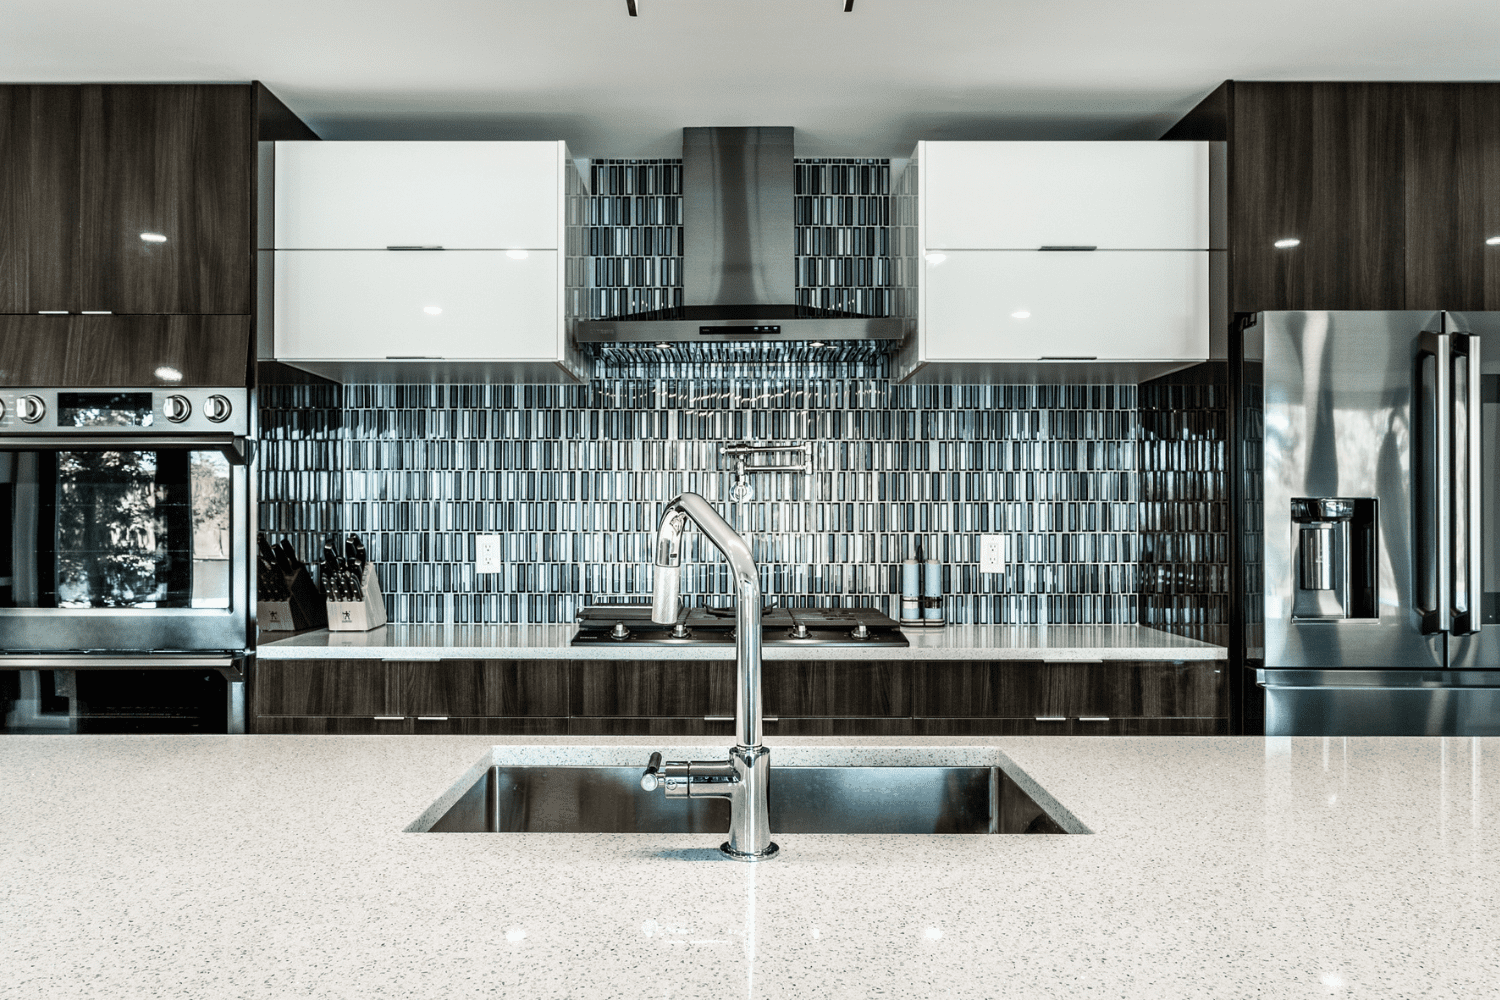 Nicholas Design Build | A modern kitchen with stainless steel appliances.